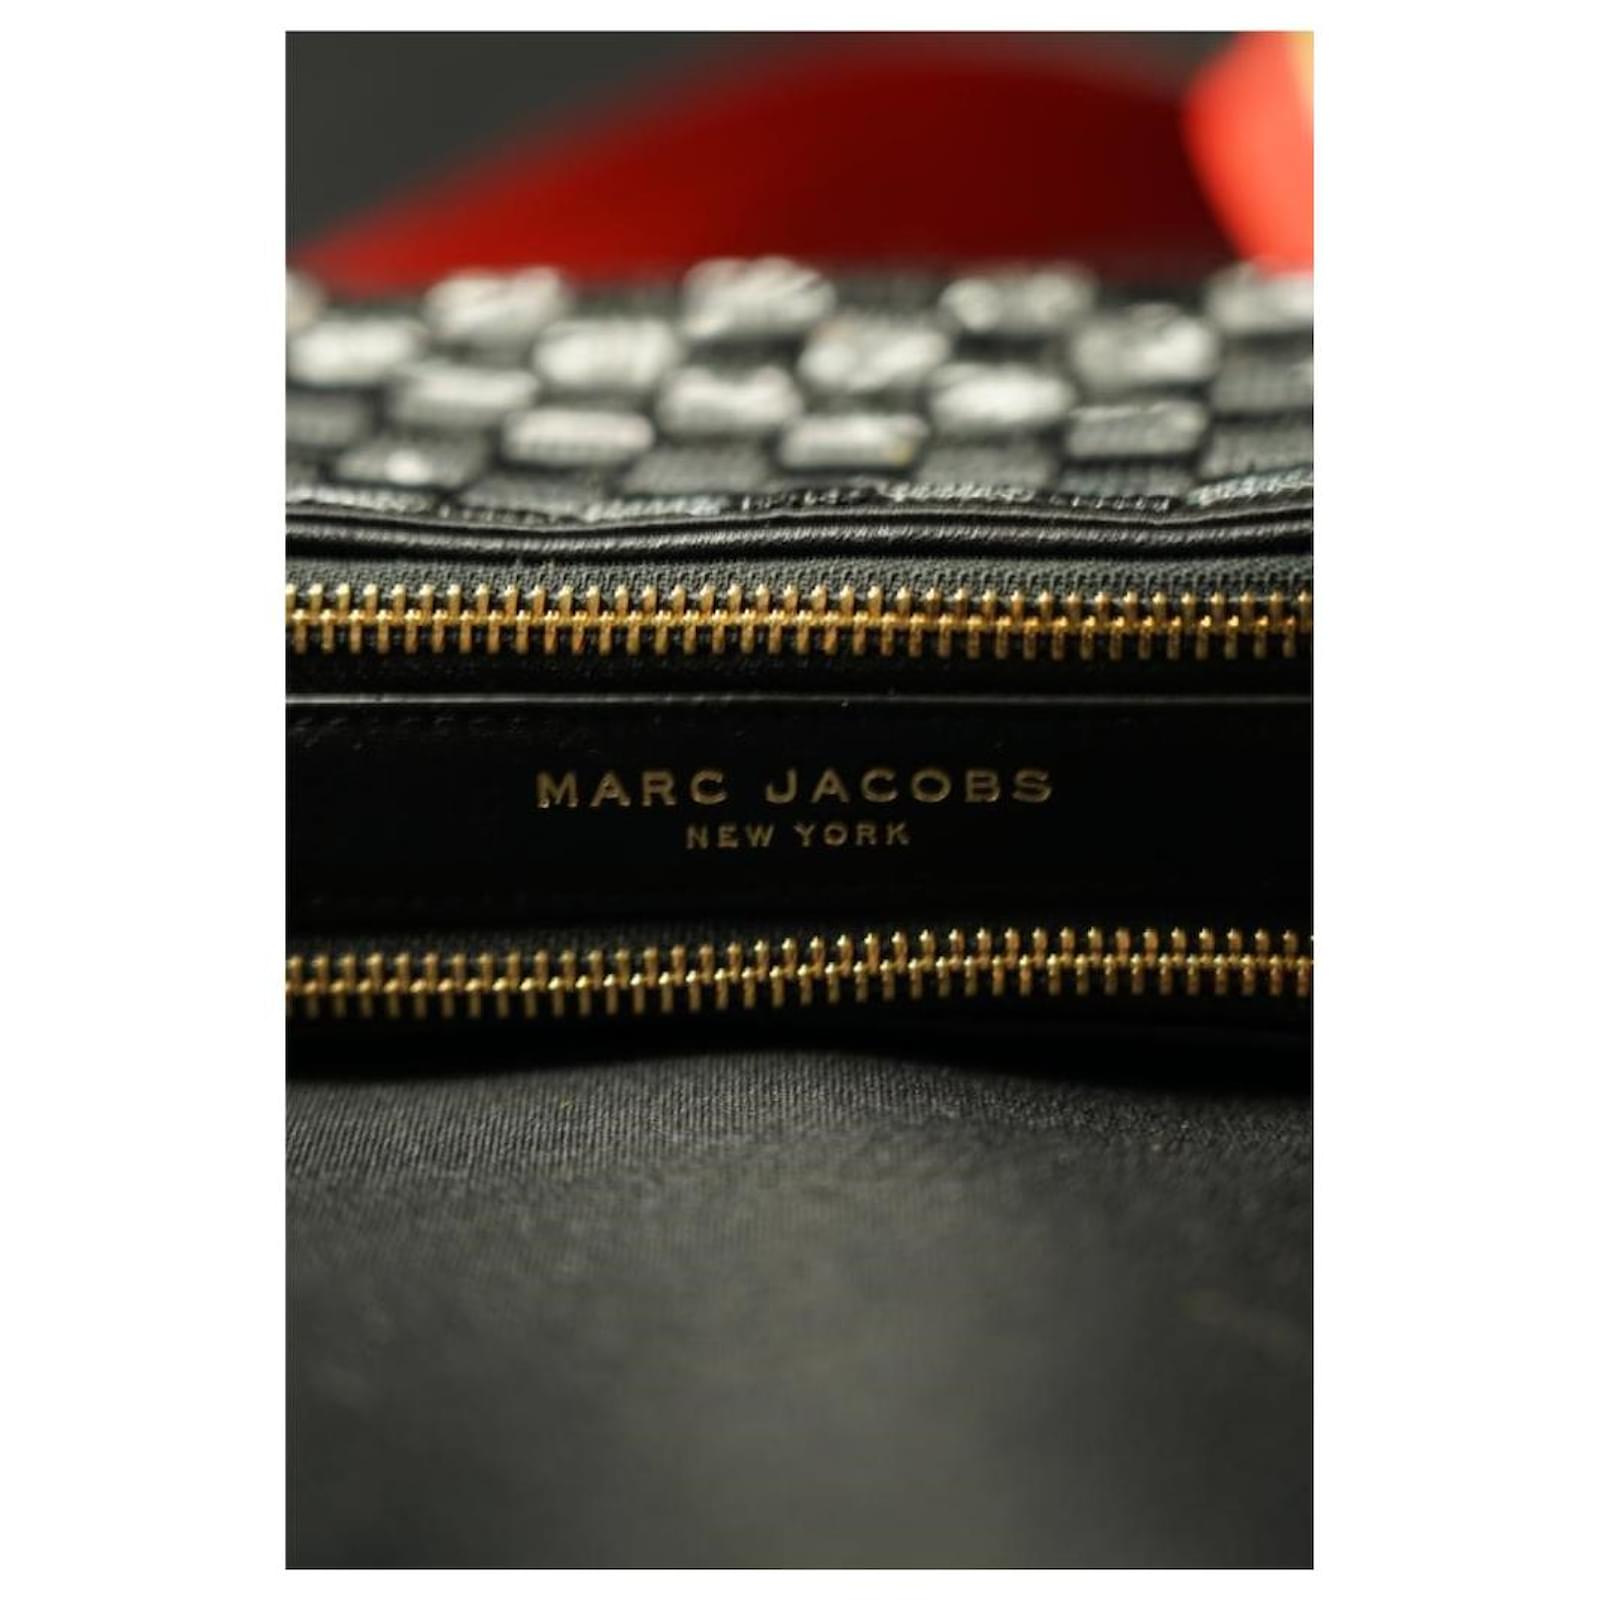 Rare color* Authentic Marc Jacobs Snapshot crossbody bag, brand